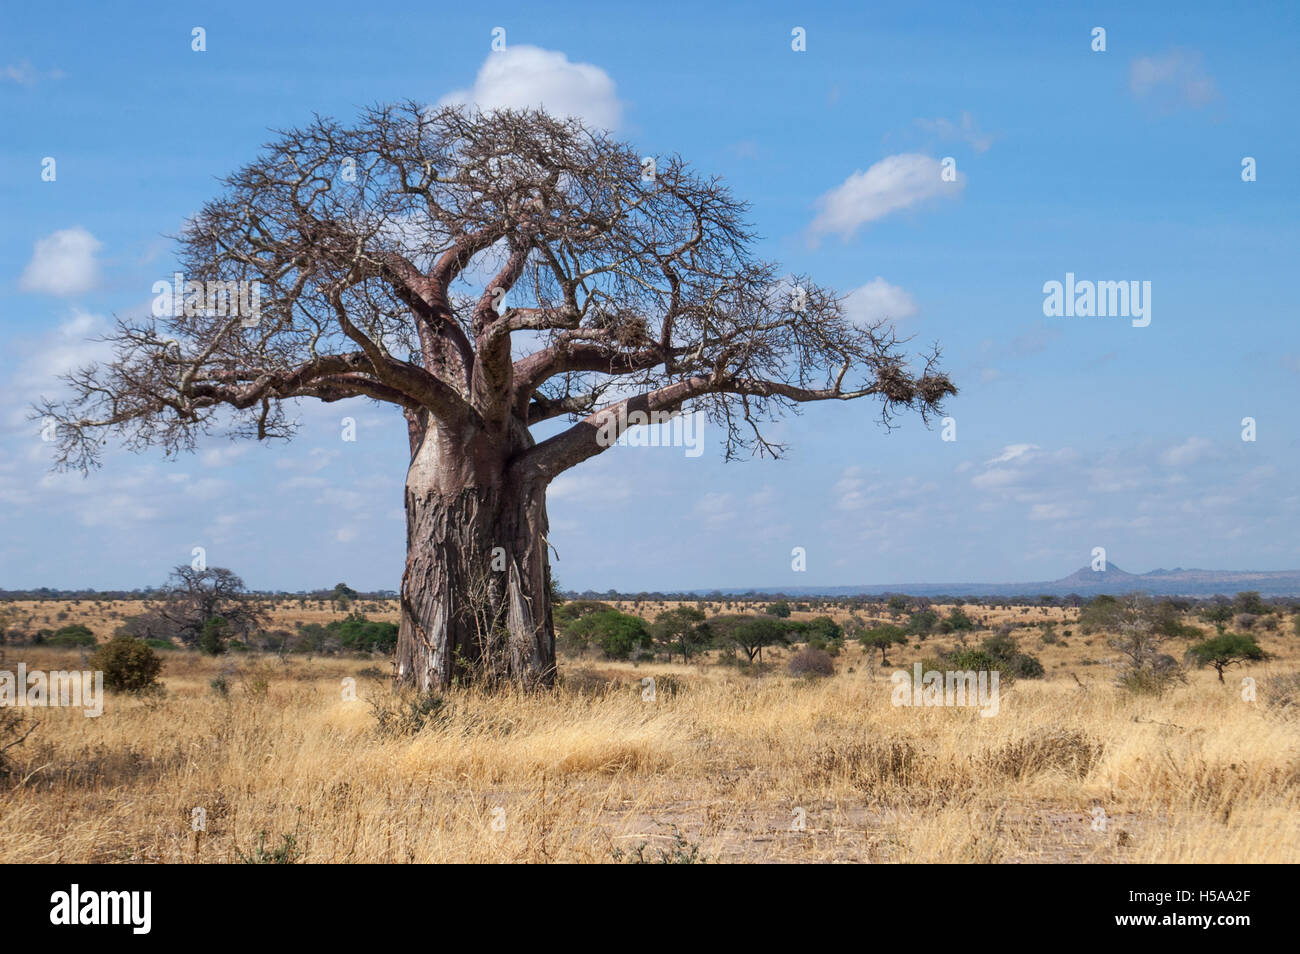 Baobab tree (Adansonia digitata) in Acacia-Commiphora bushland habitat, Tarangire National Park, Tanzania Stock Photo